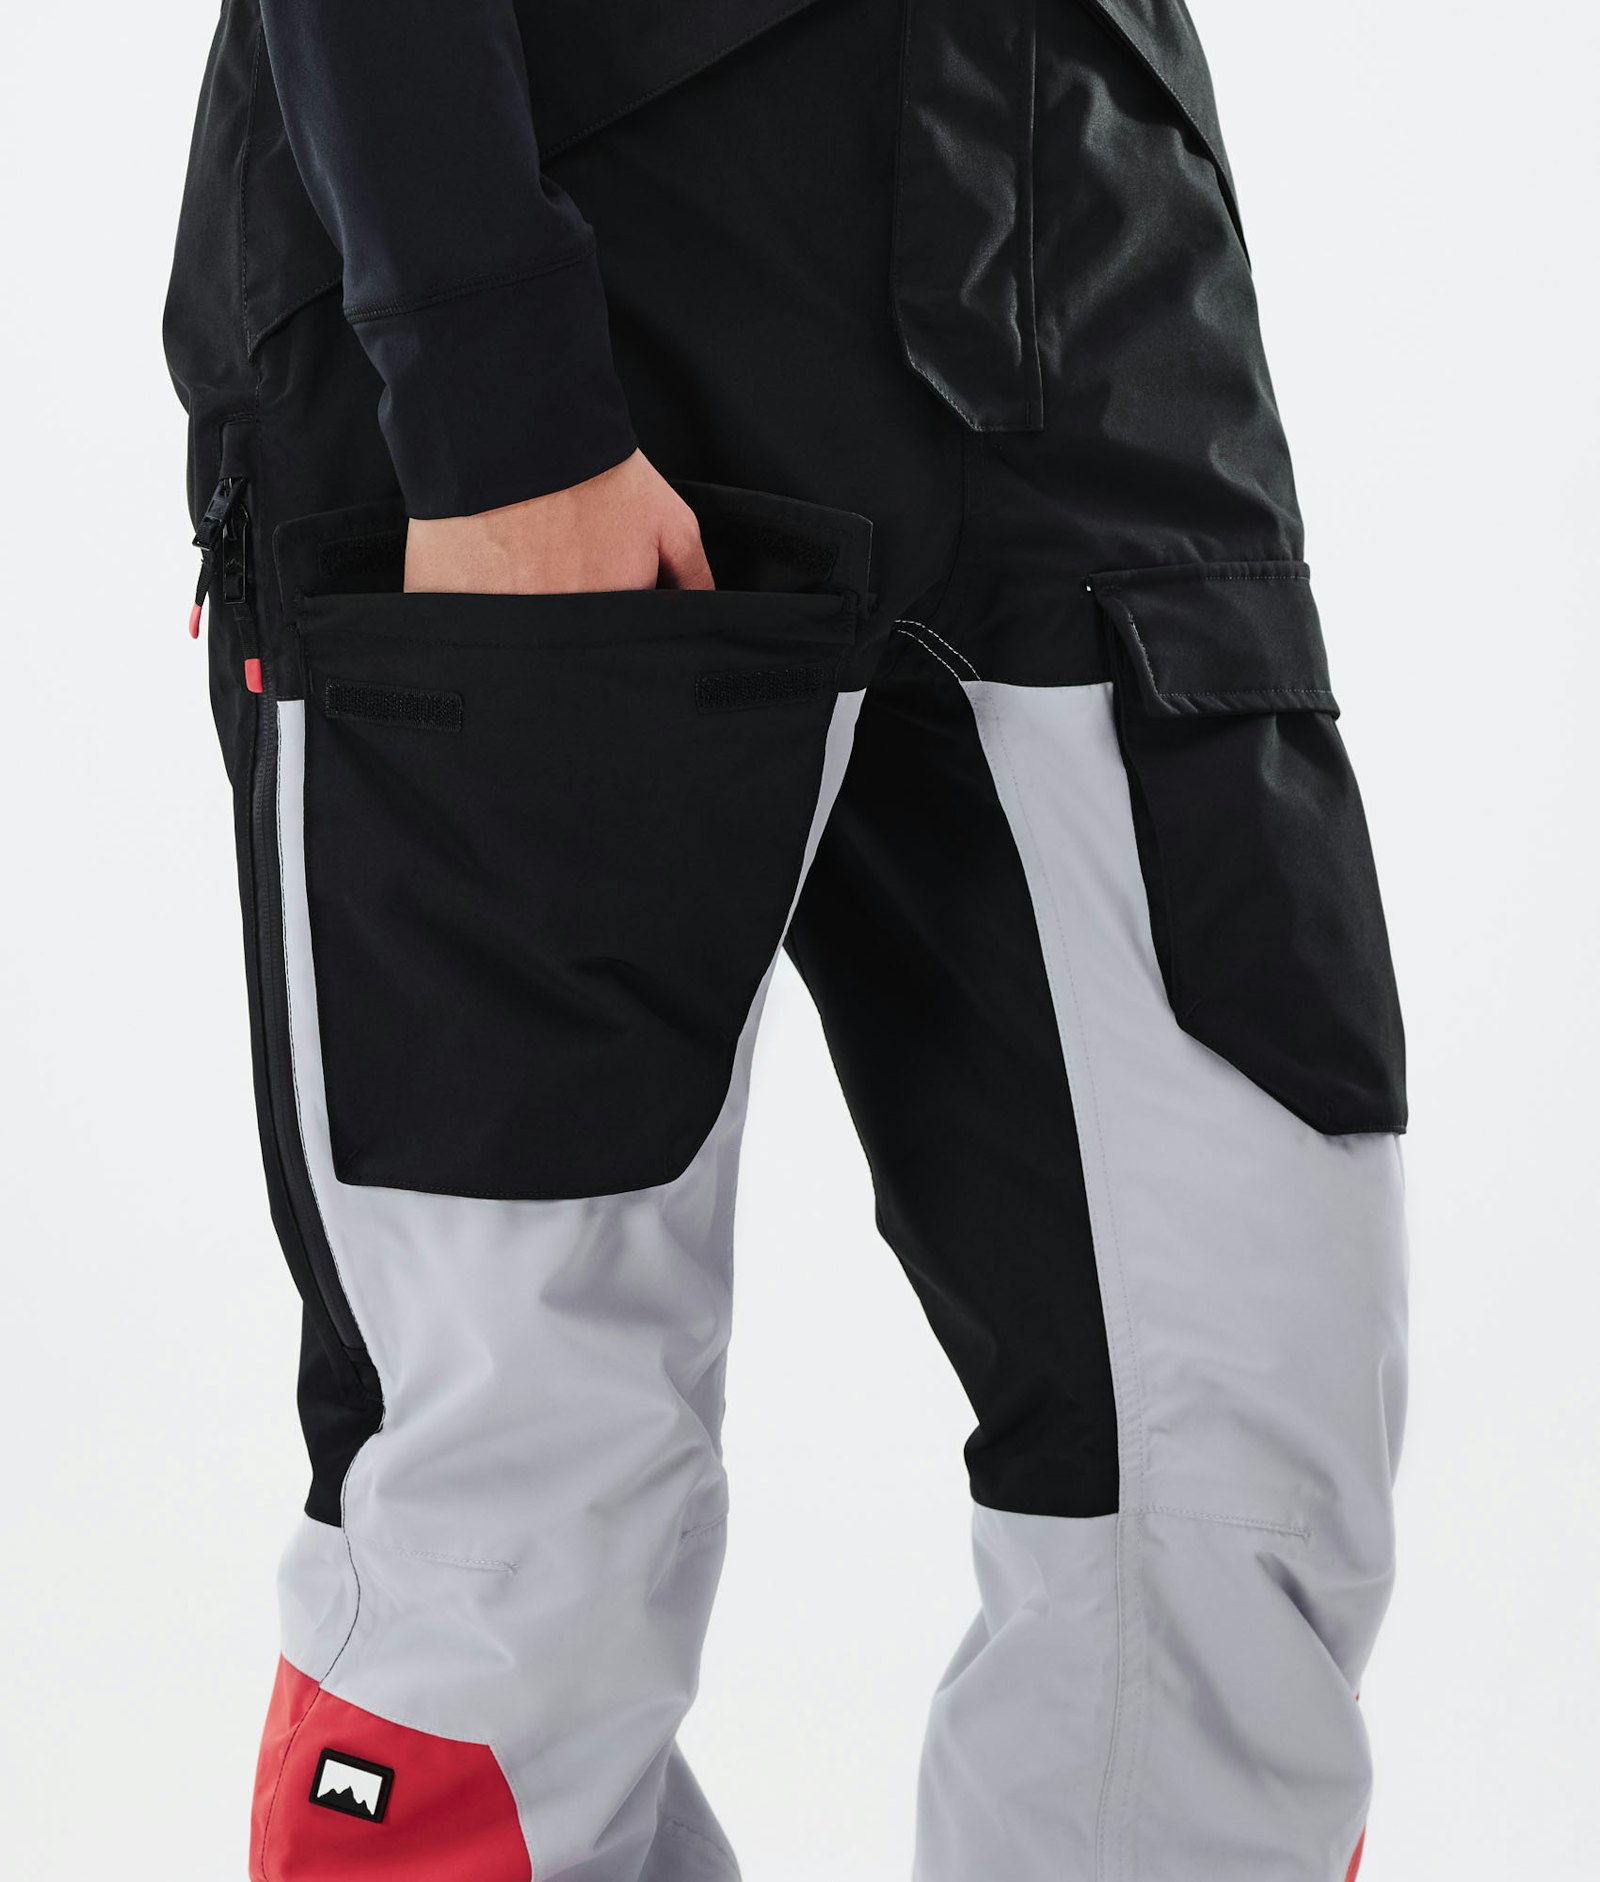 Fawk W 2021 Snowboardhose Damen Black/Light Grey/Coral